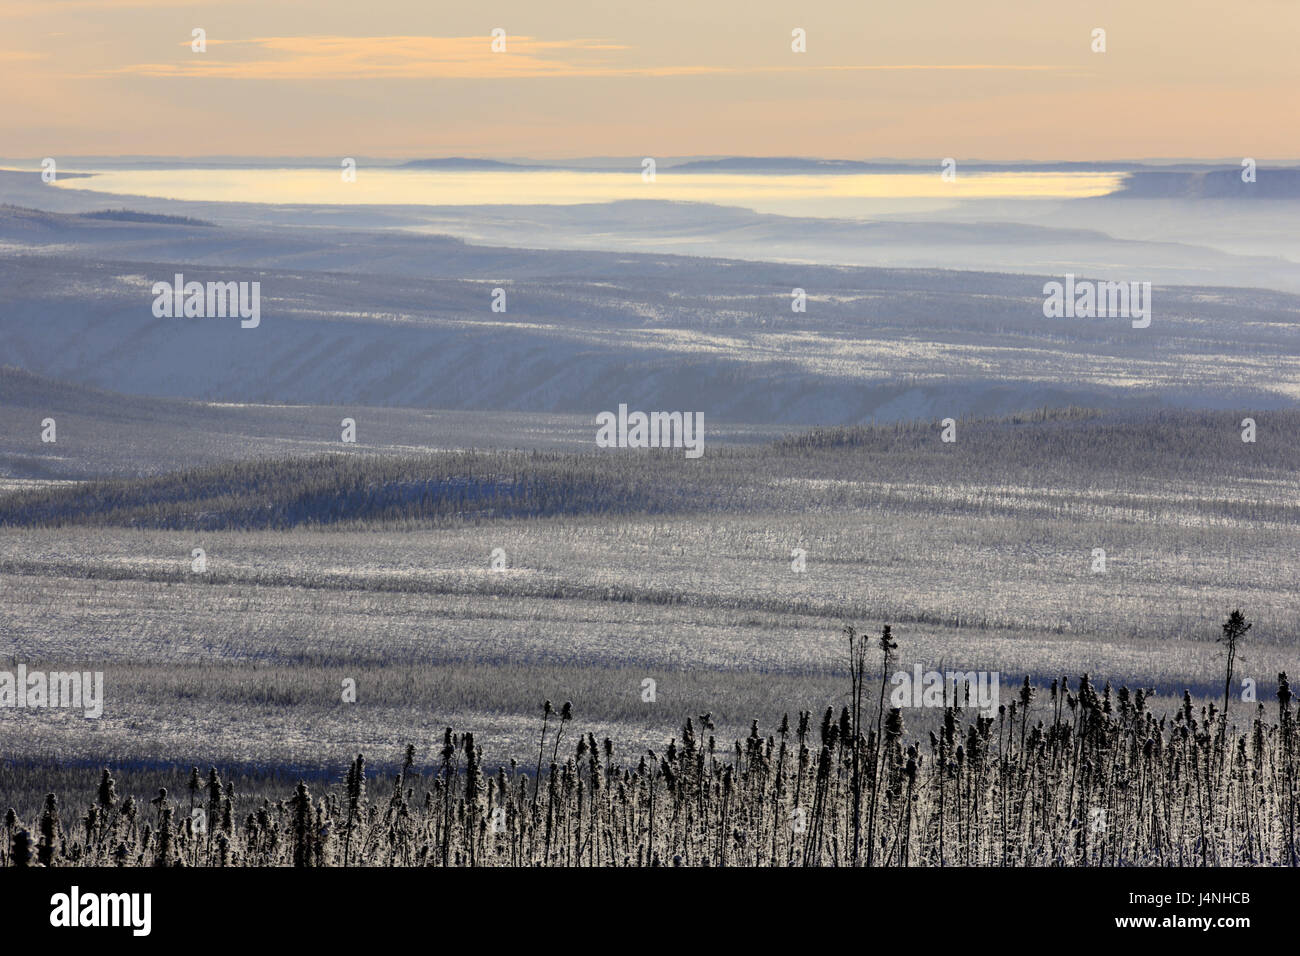 North America, Canada, Yukon territory, Eagle Plains, Dempster highway, Porcupine plateau, winter scenery, Stock Photo